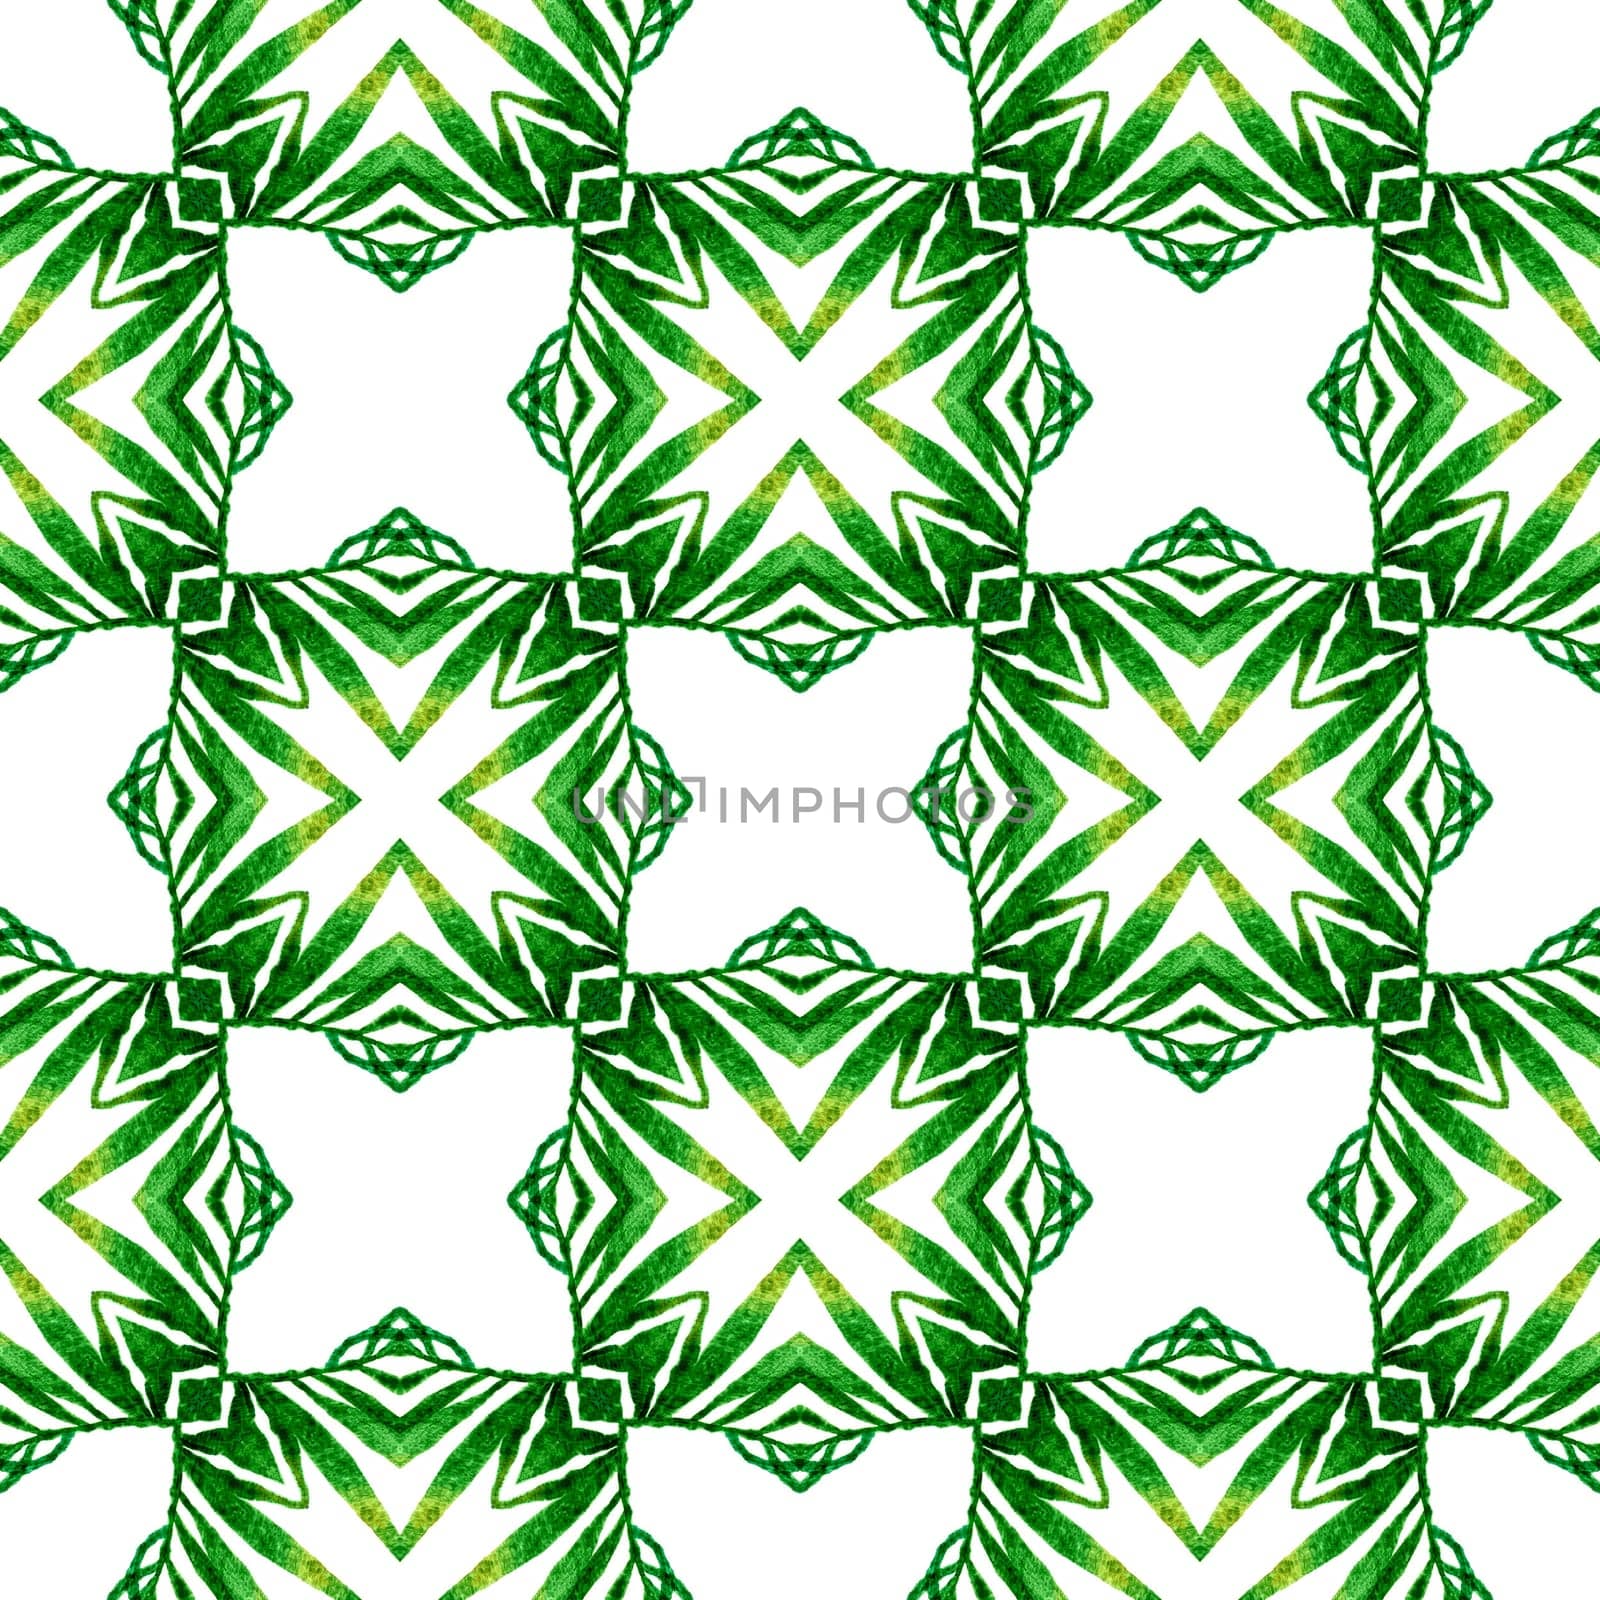 Chevron watercolor pattern. Green gorgeous boho chic summer design. Textile ready exotic print, swimwear fabric, wallpaper, wrapping. Green geometric chevron watercolor border.